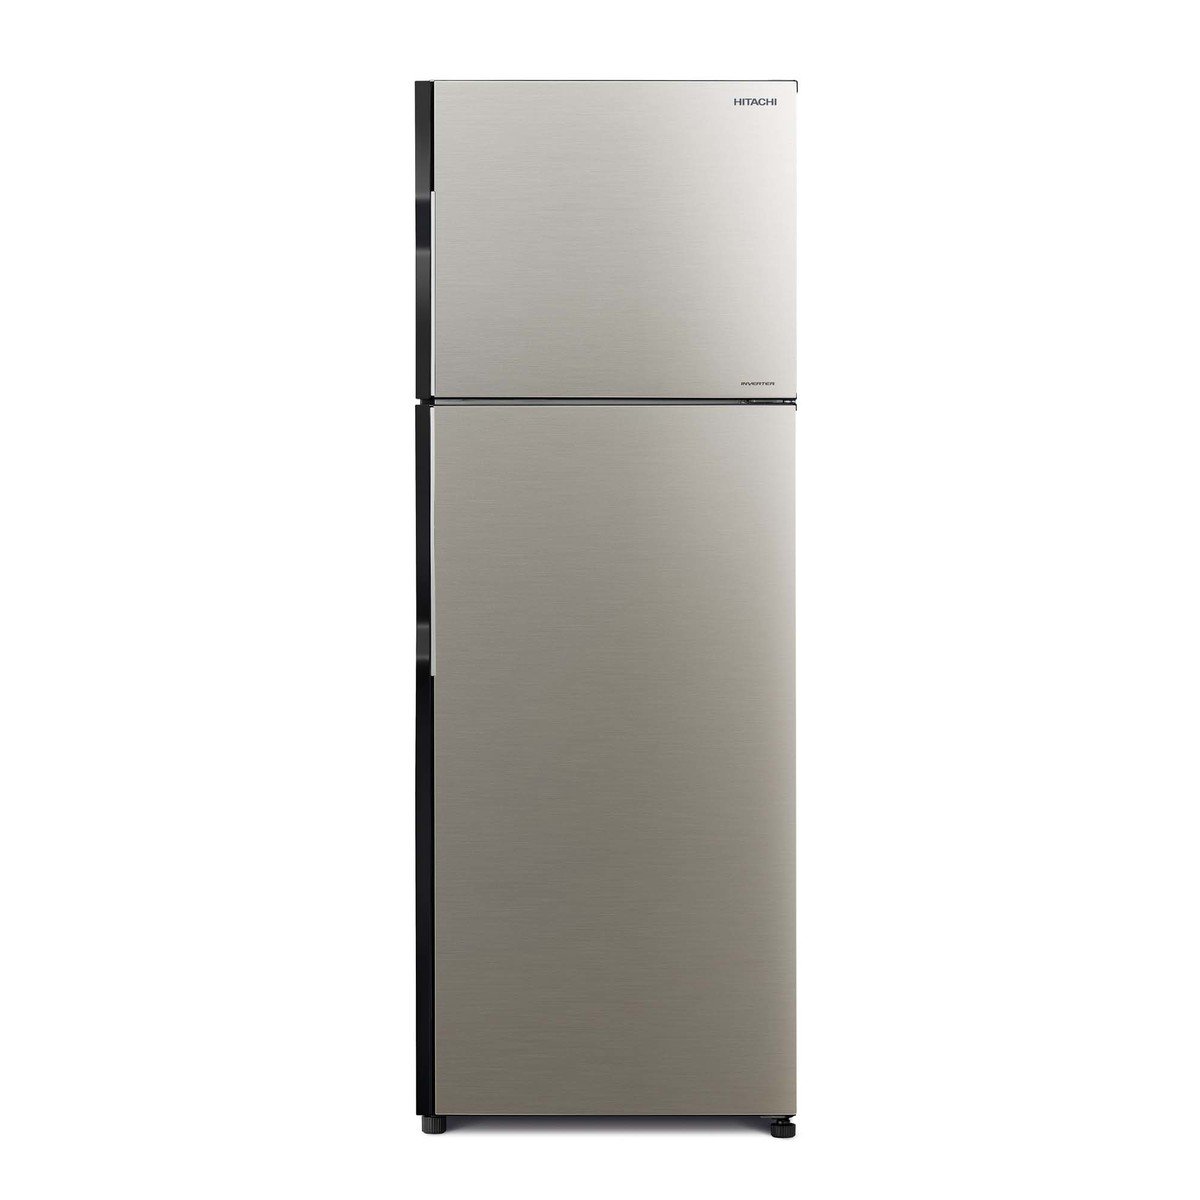 Hitachi Double Door Refrigerator RH380PUK7KBSL 380LTR